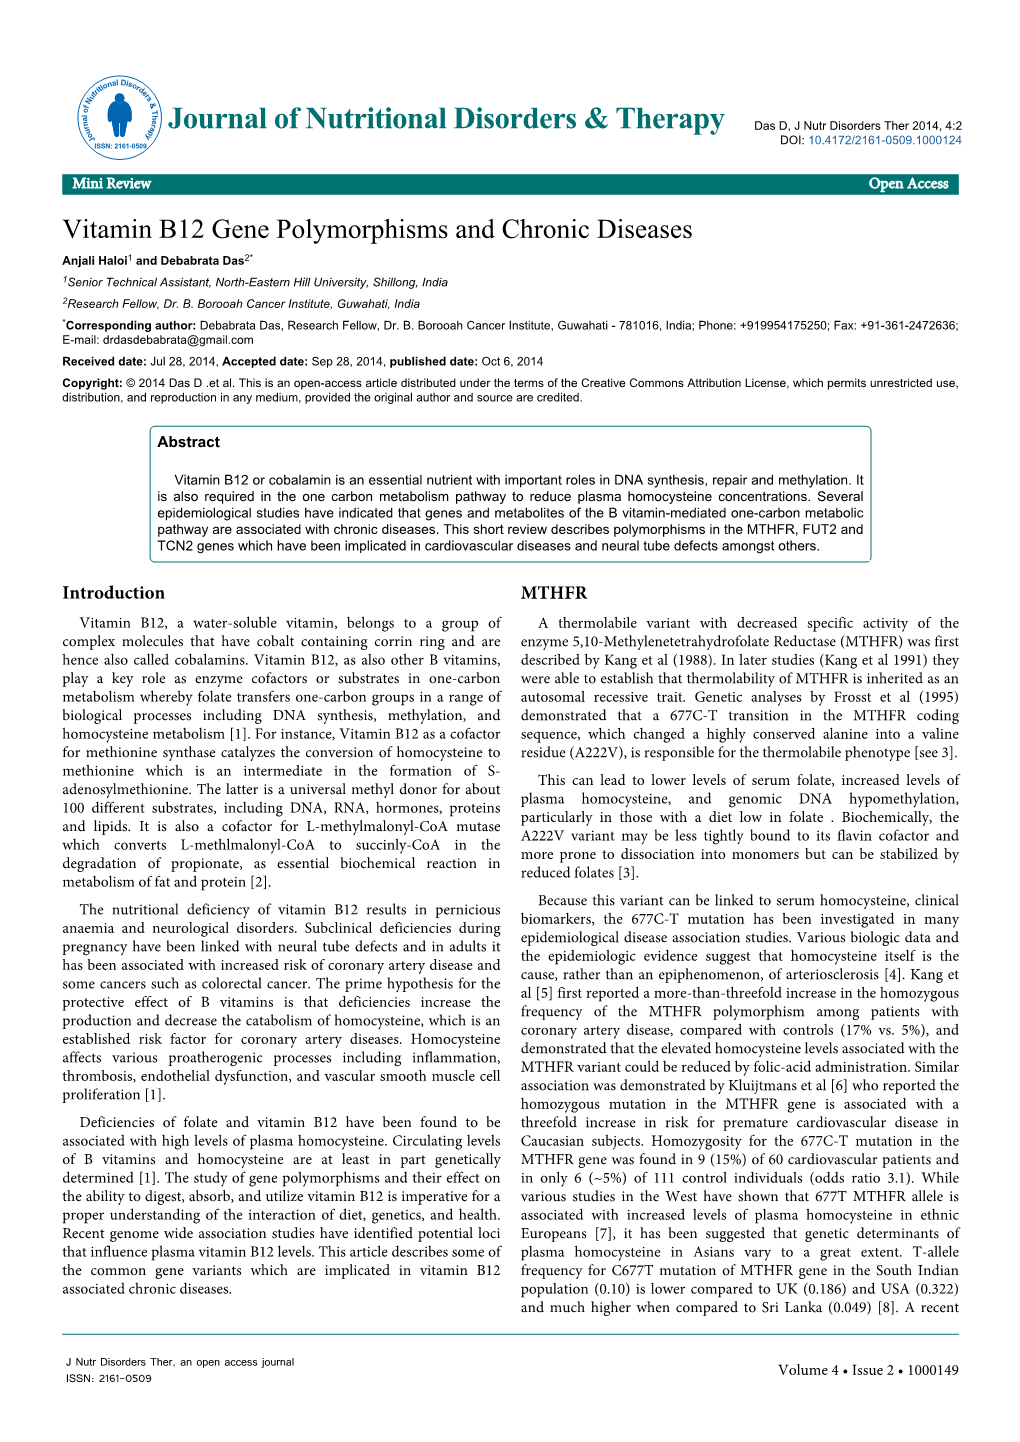 Vitamin B12 Gene Polymorphisms and Chronic Diseases